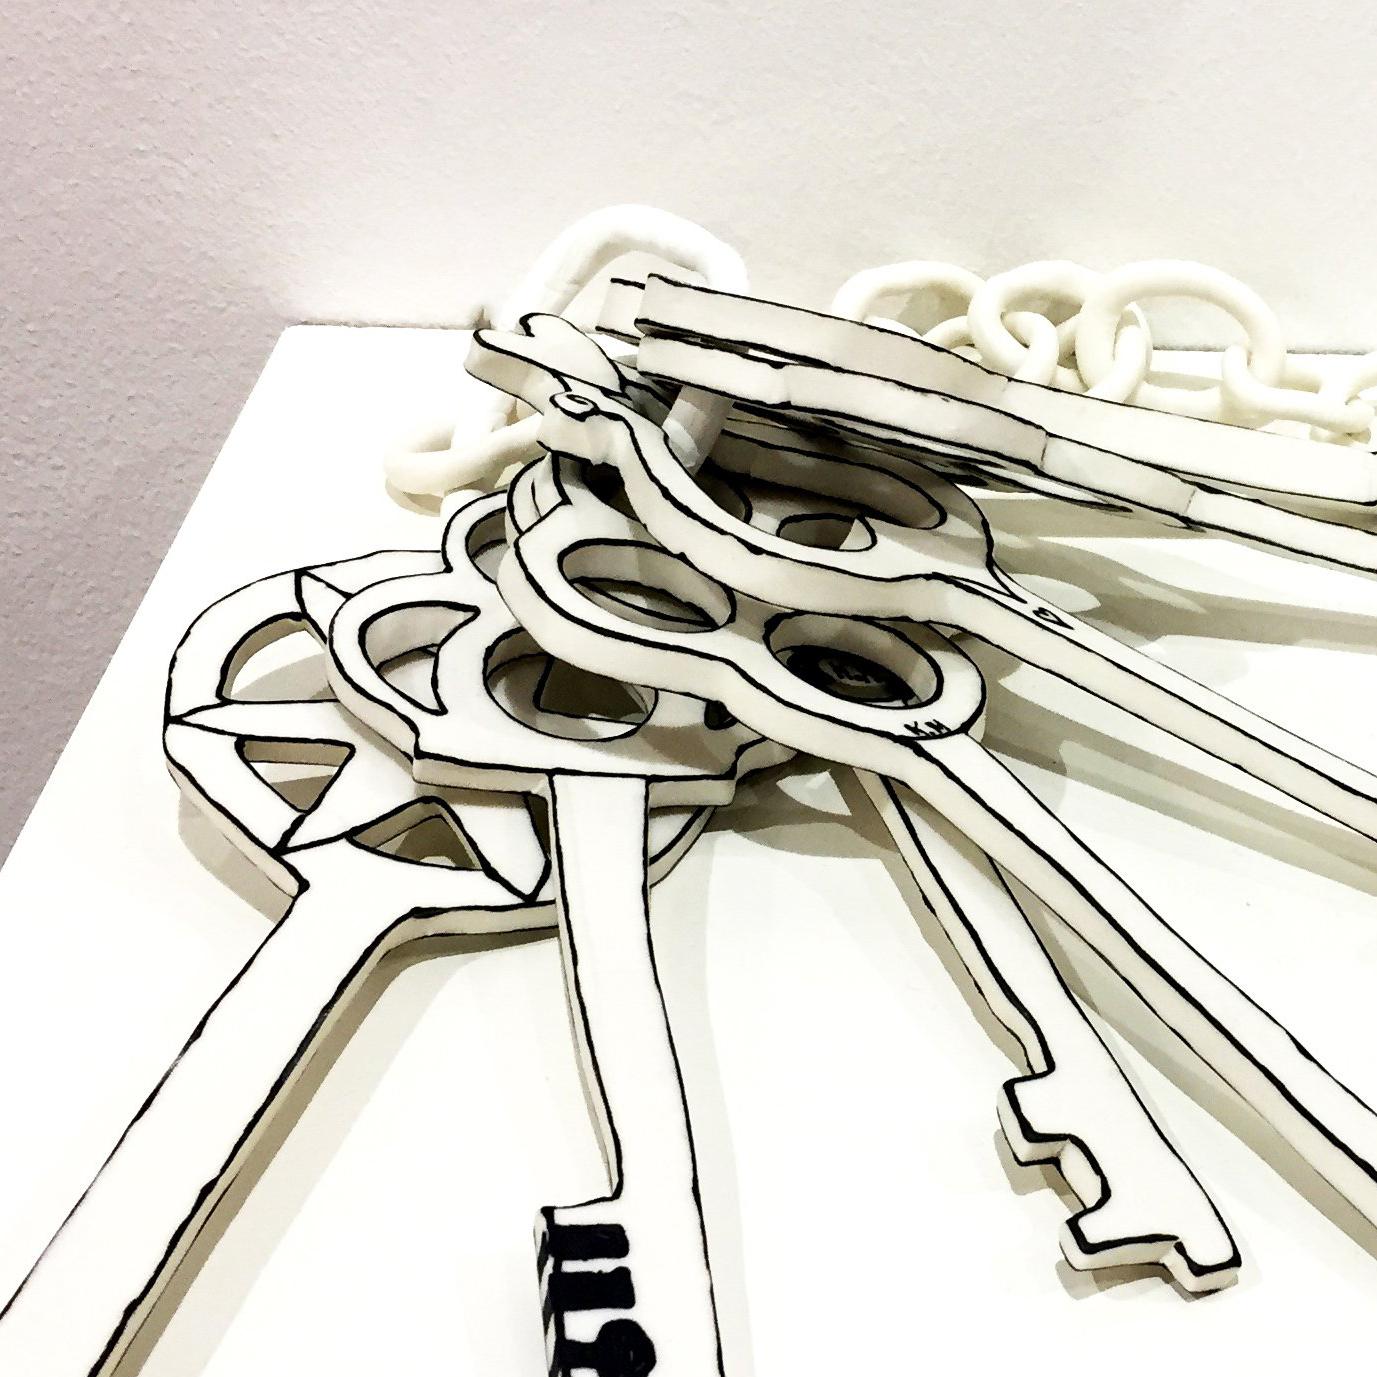 Bunch of Keys on Chain - Pop Art Sculpture by Katharine Morling